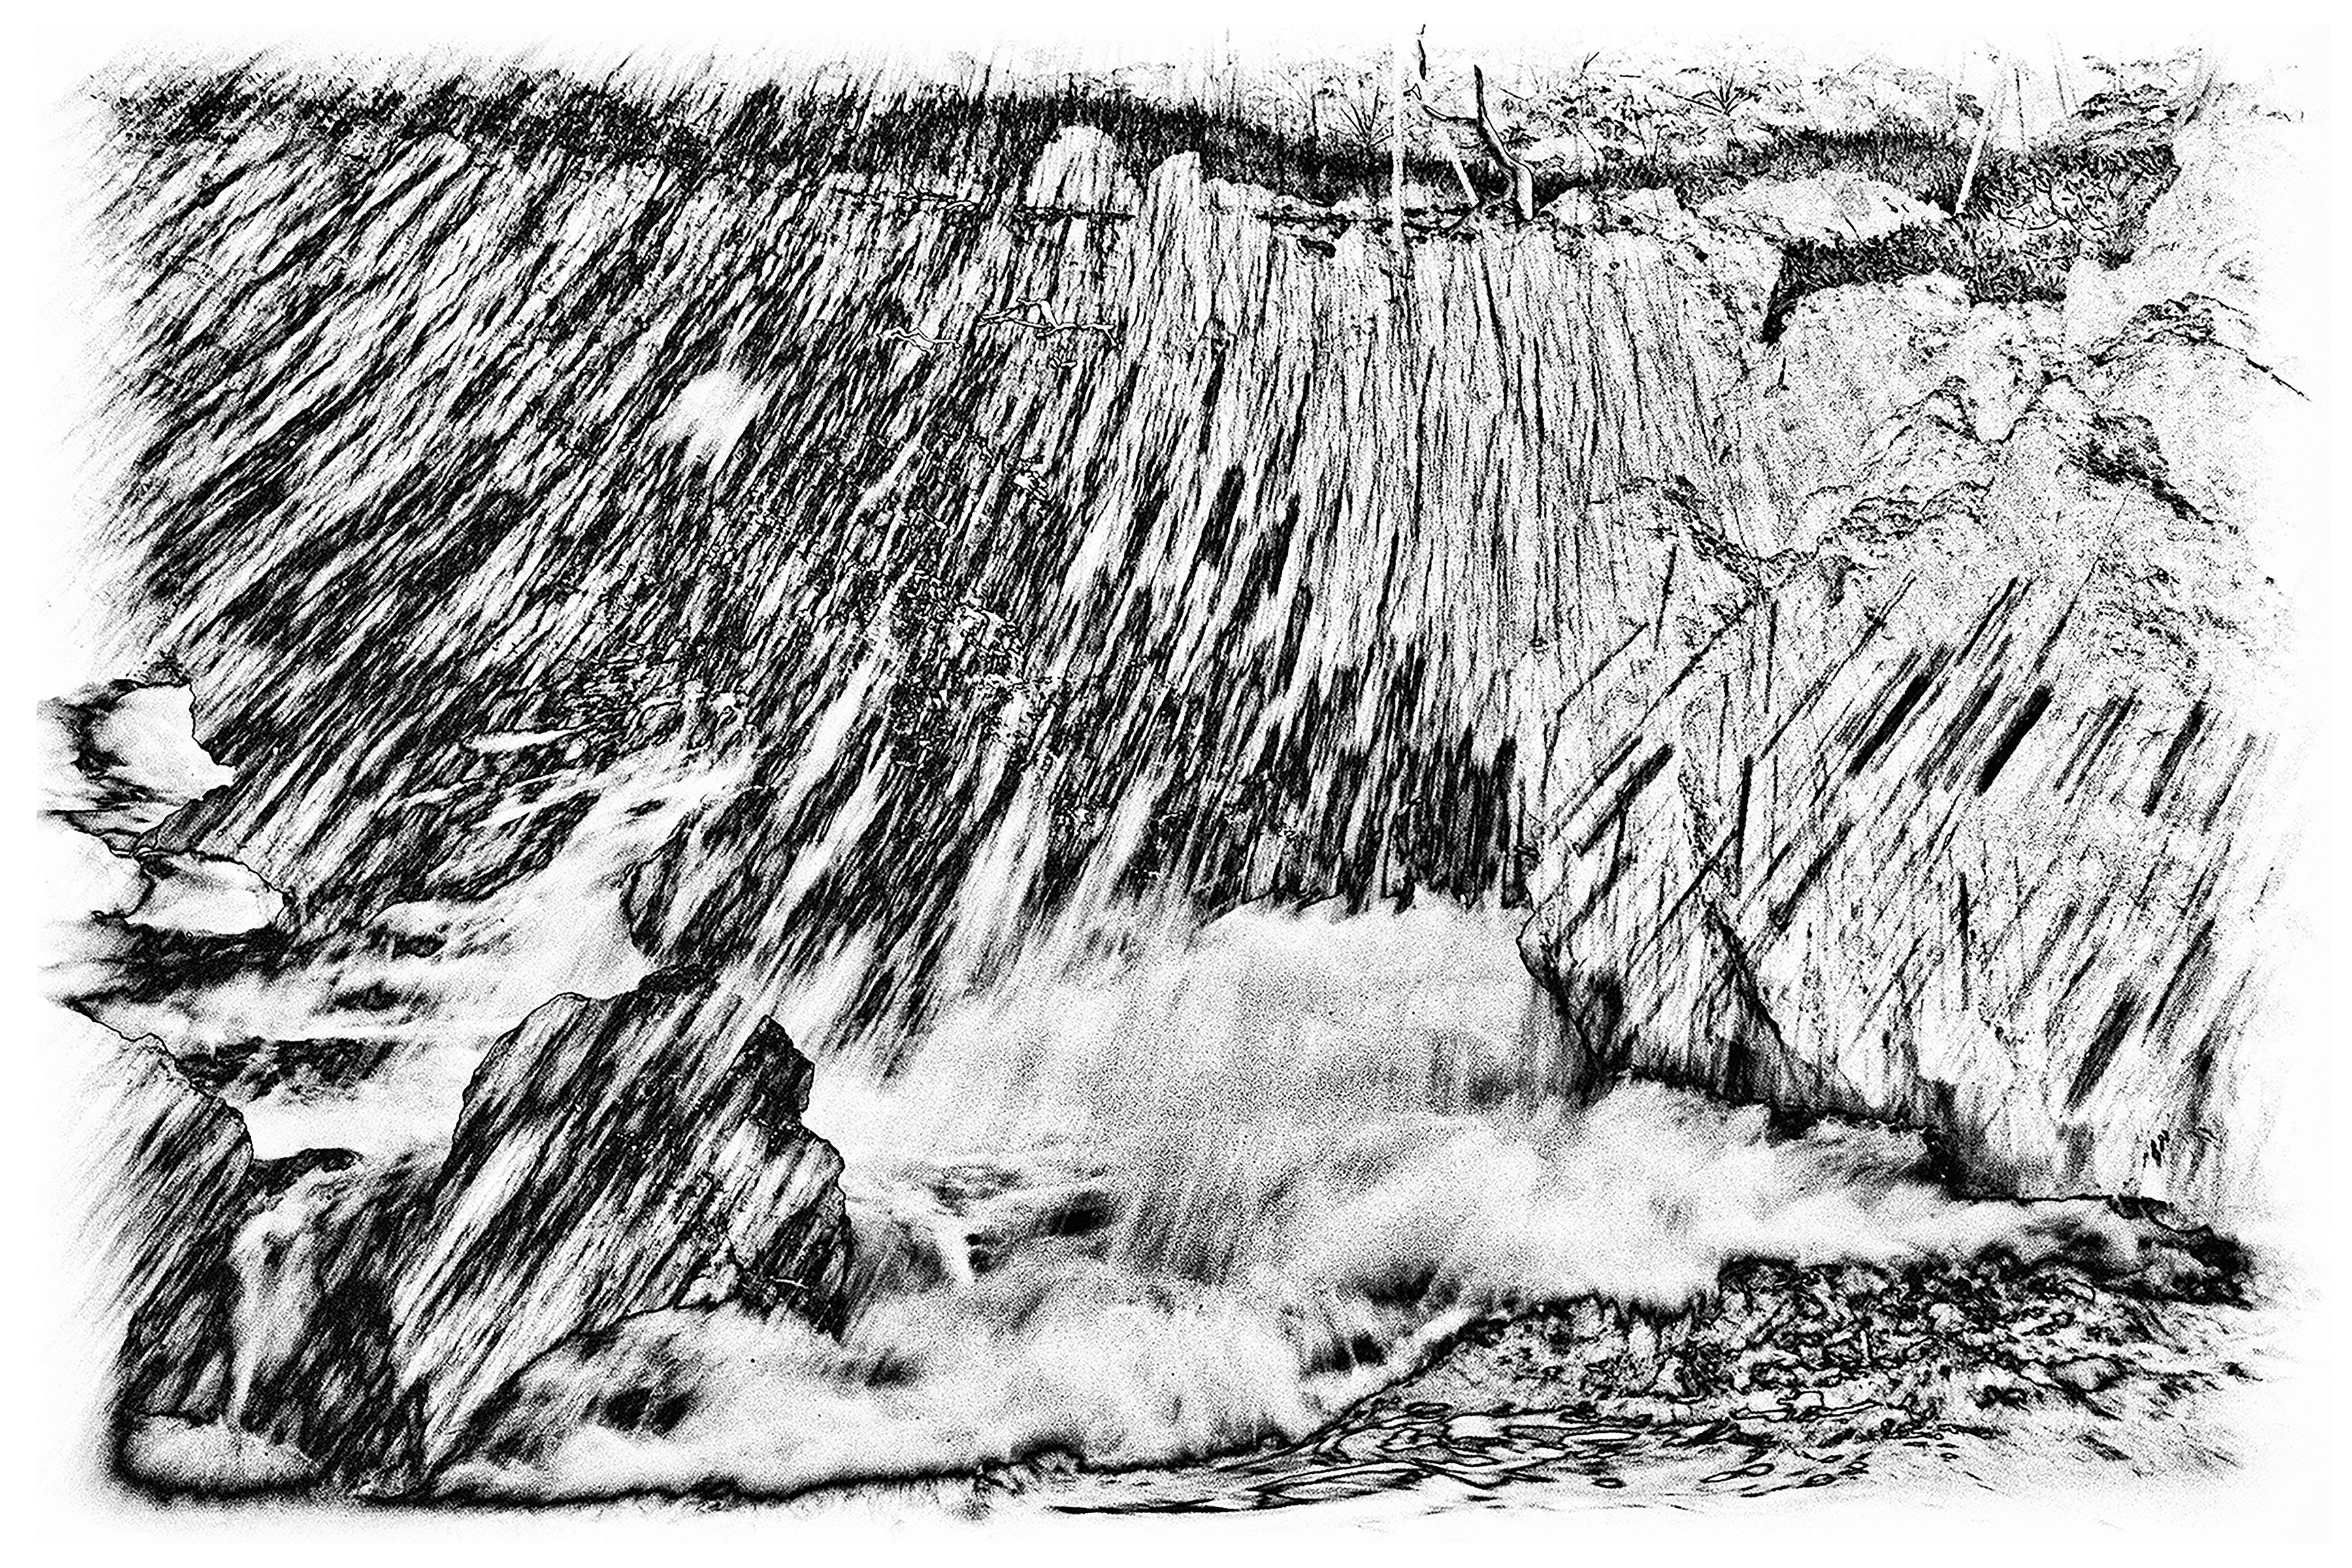 Holly Gordon Landscape Photograph - Water Music Series #4996 : landscape photography